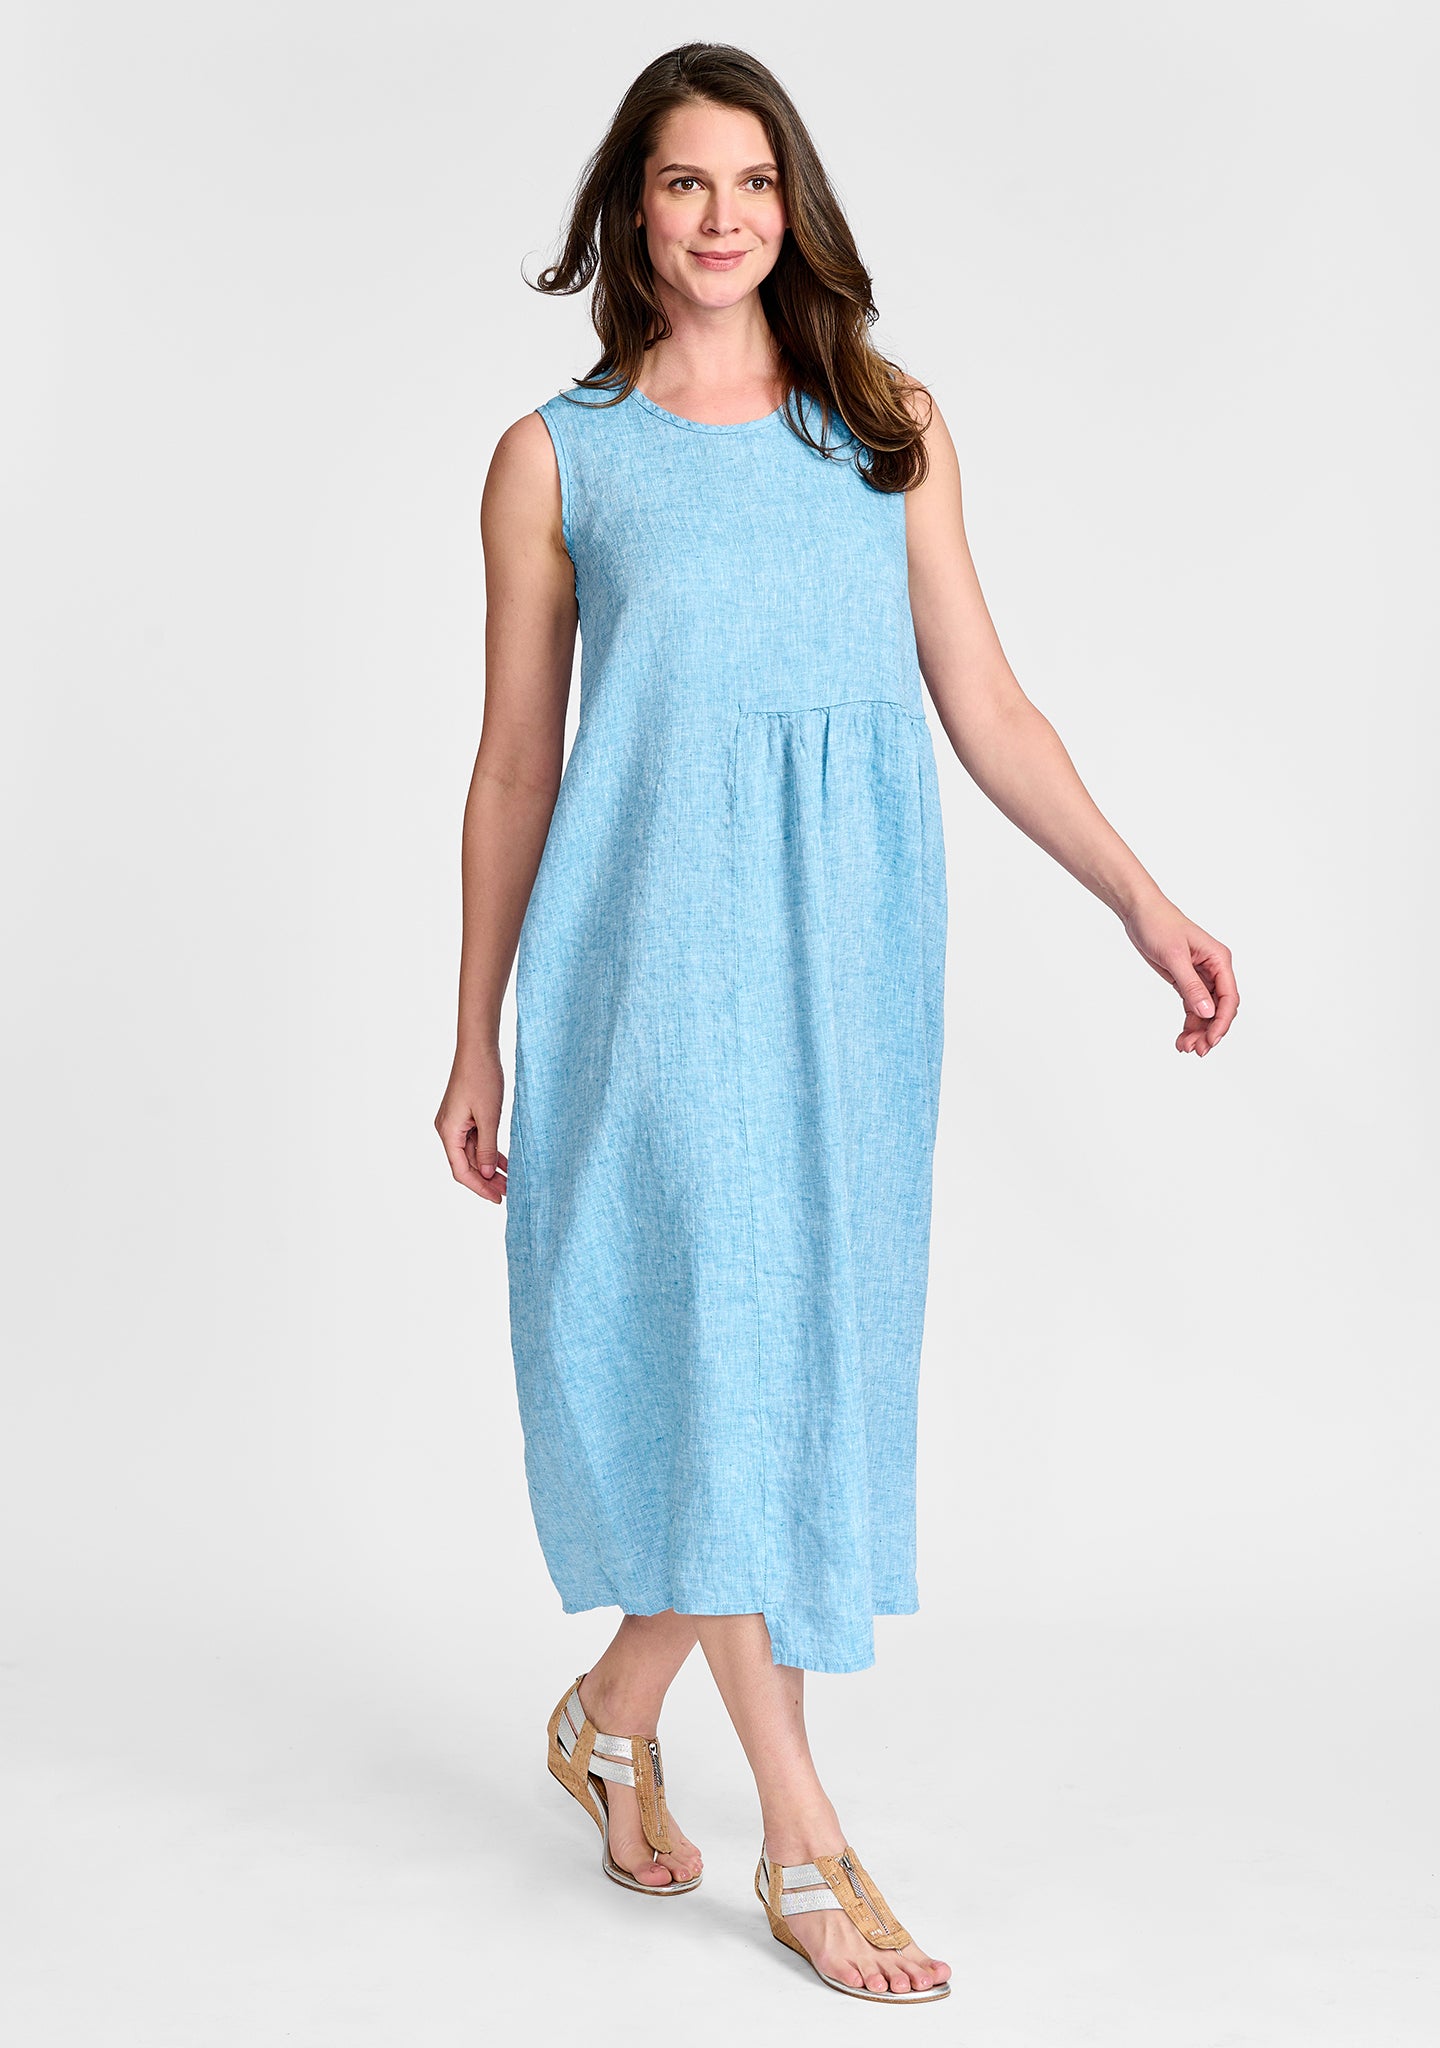 FLAX linen dress in blue